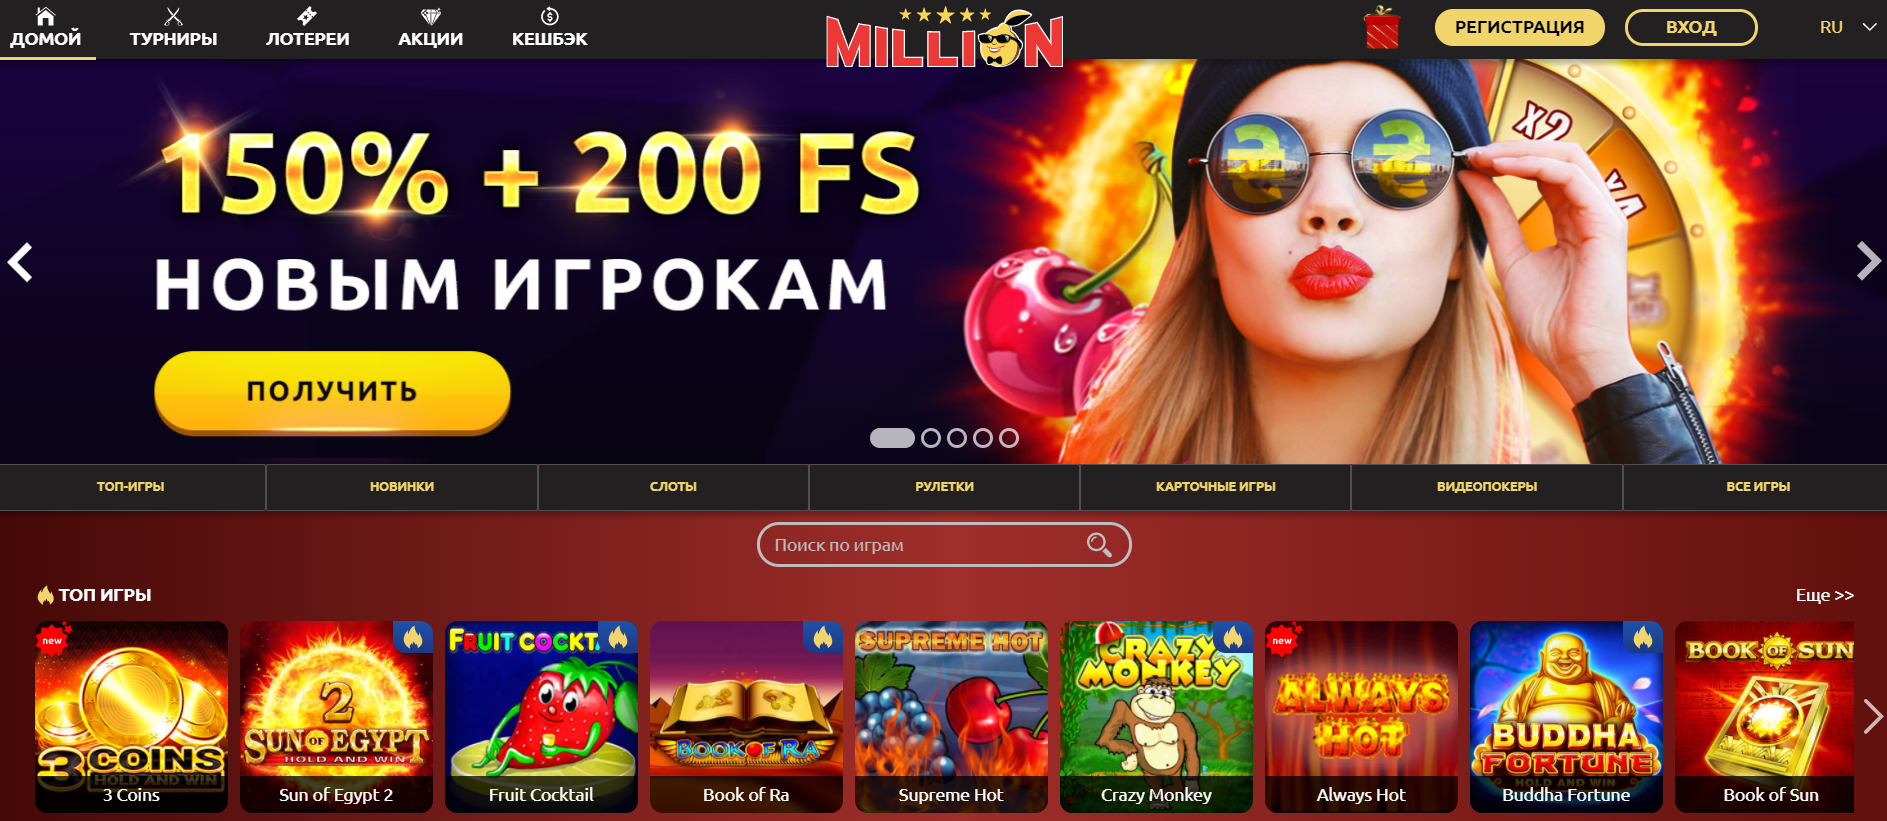 million casino games